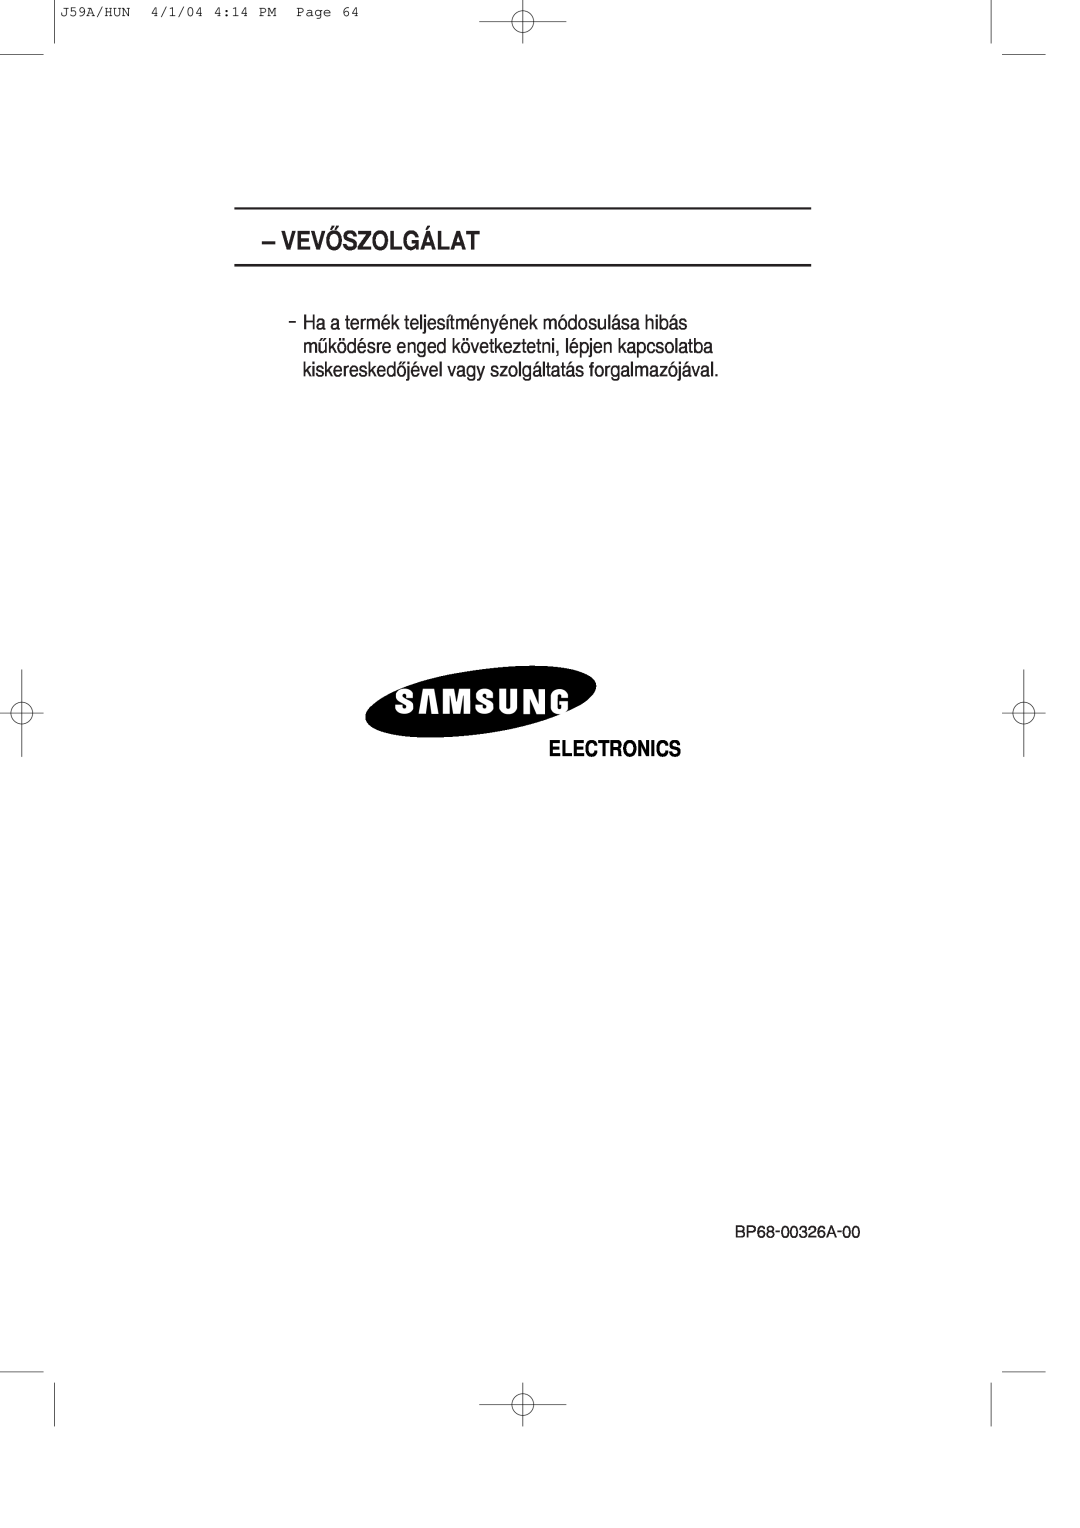 Samsung SP43T8/54T8, SP43Q1/47Q1 manual Ð VEVÌSZOLGçLAT, Electronics, J59A/HUN 4/1/04 414 PM Page 